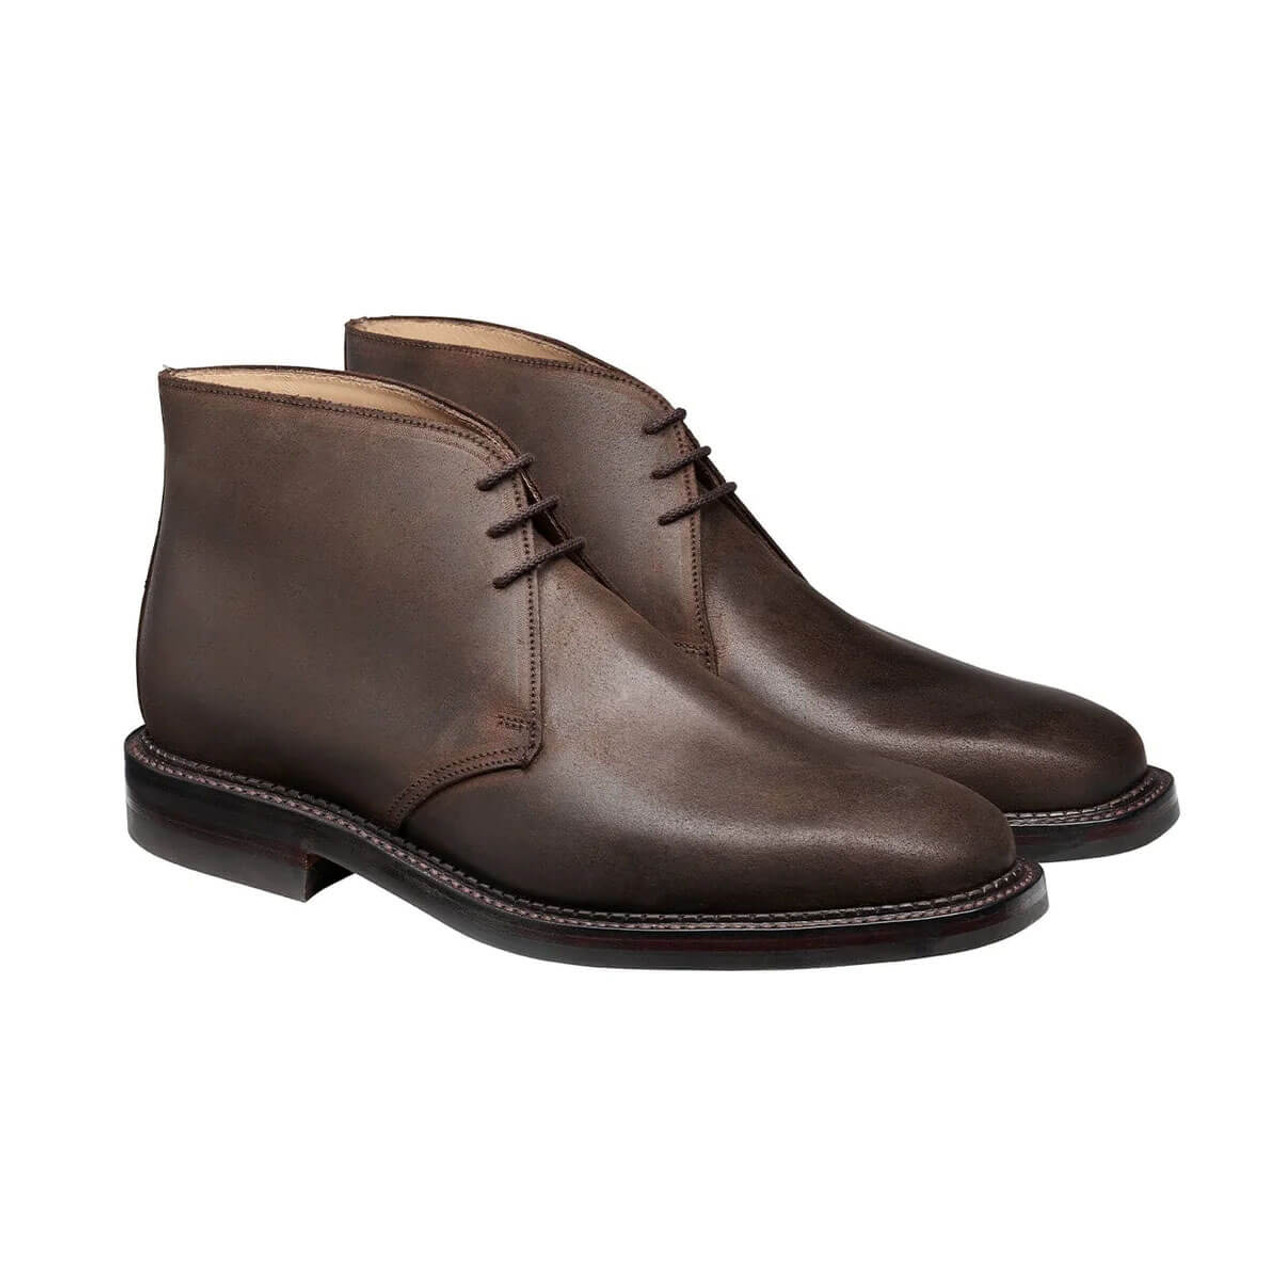 Crockett and Jones Men's Molton Boots - Dark Brown Rough-Out Suede